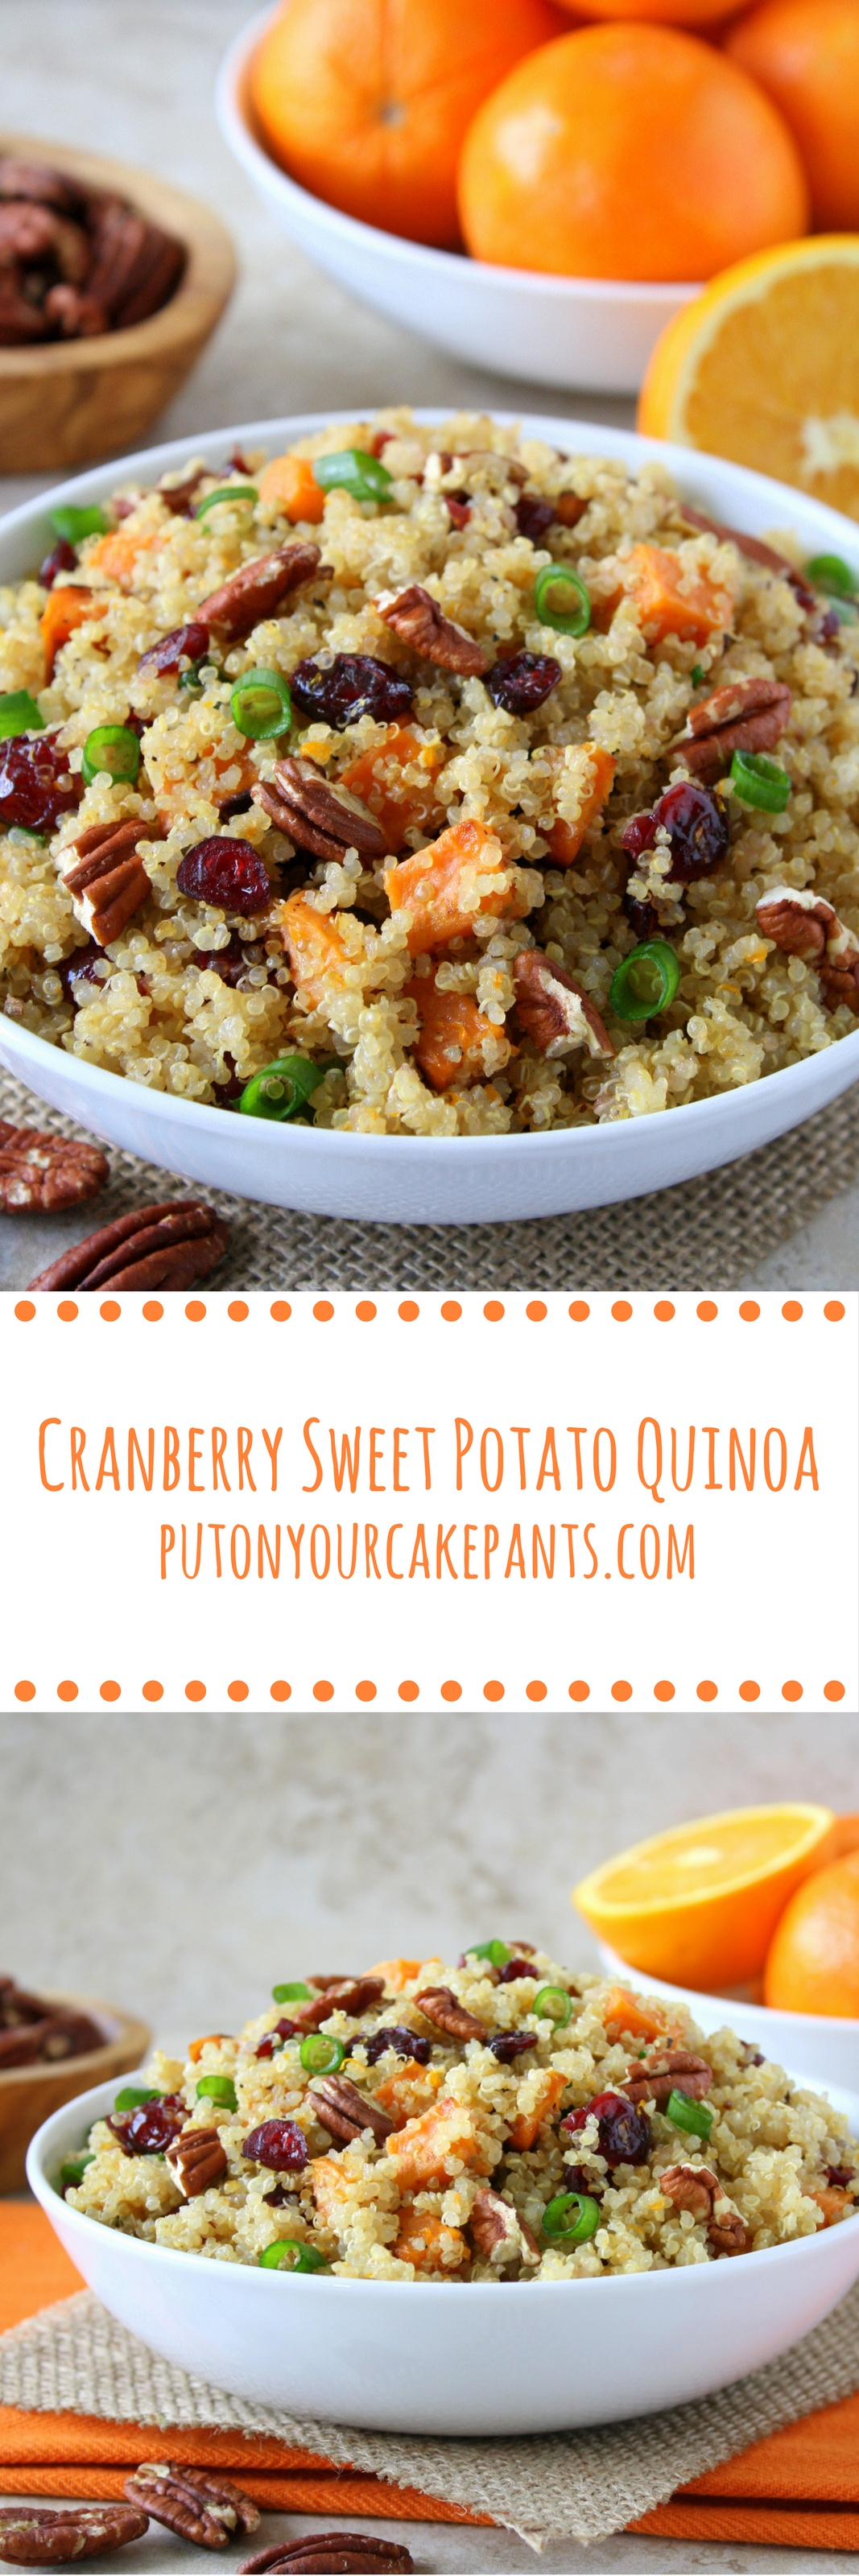 cranberry sweet potato quinoa